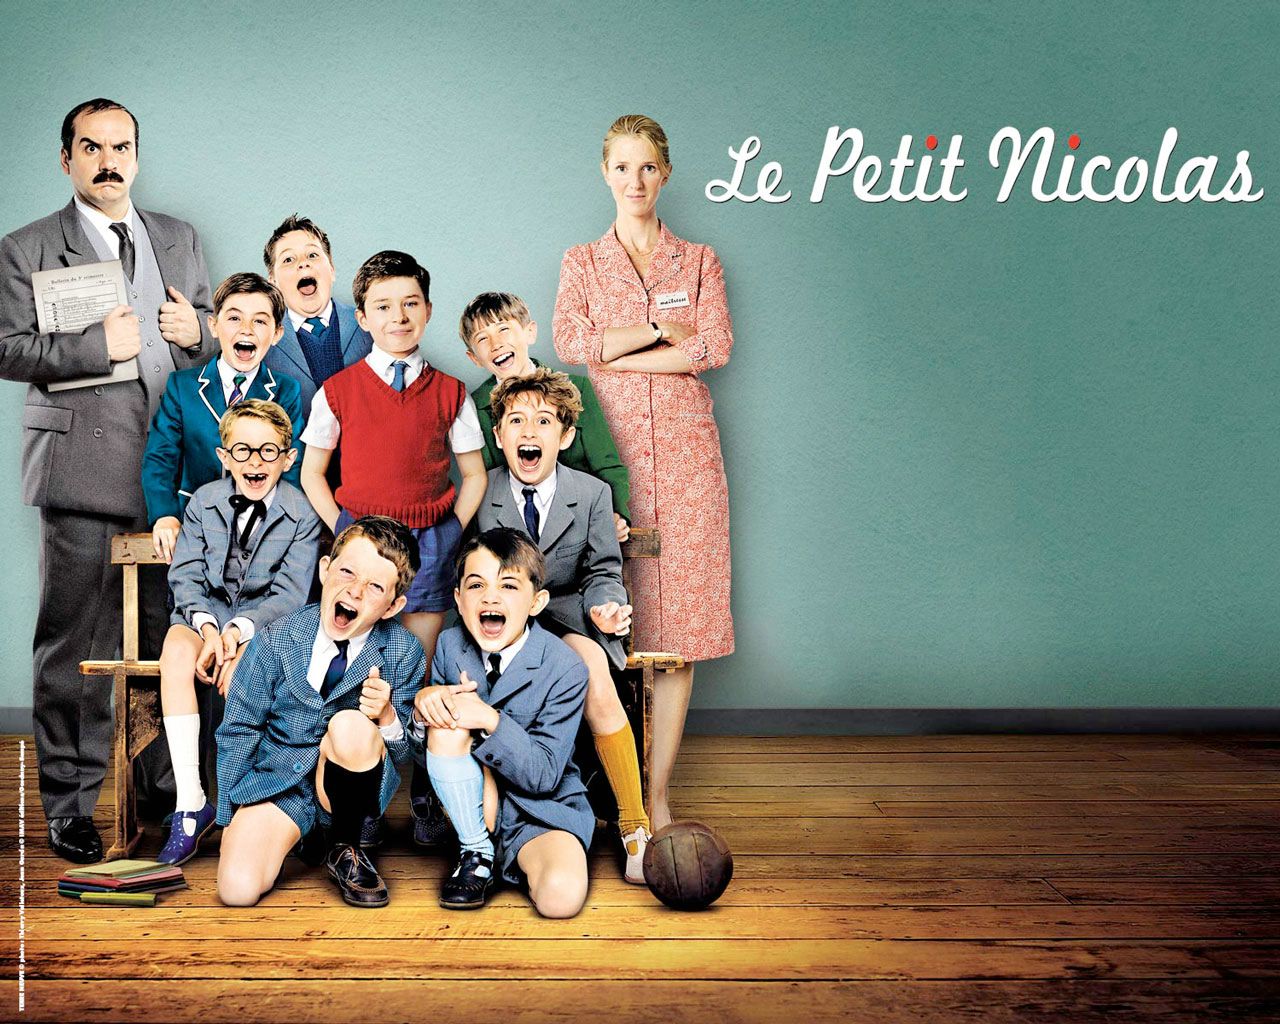 Le Petit Nicolas Wallpaper : Download Le Petit Nicolas wallpaper for